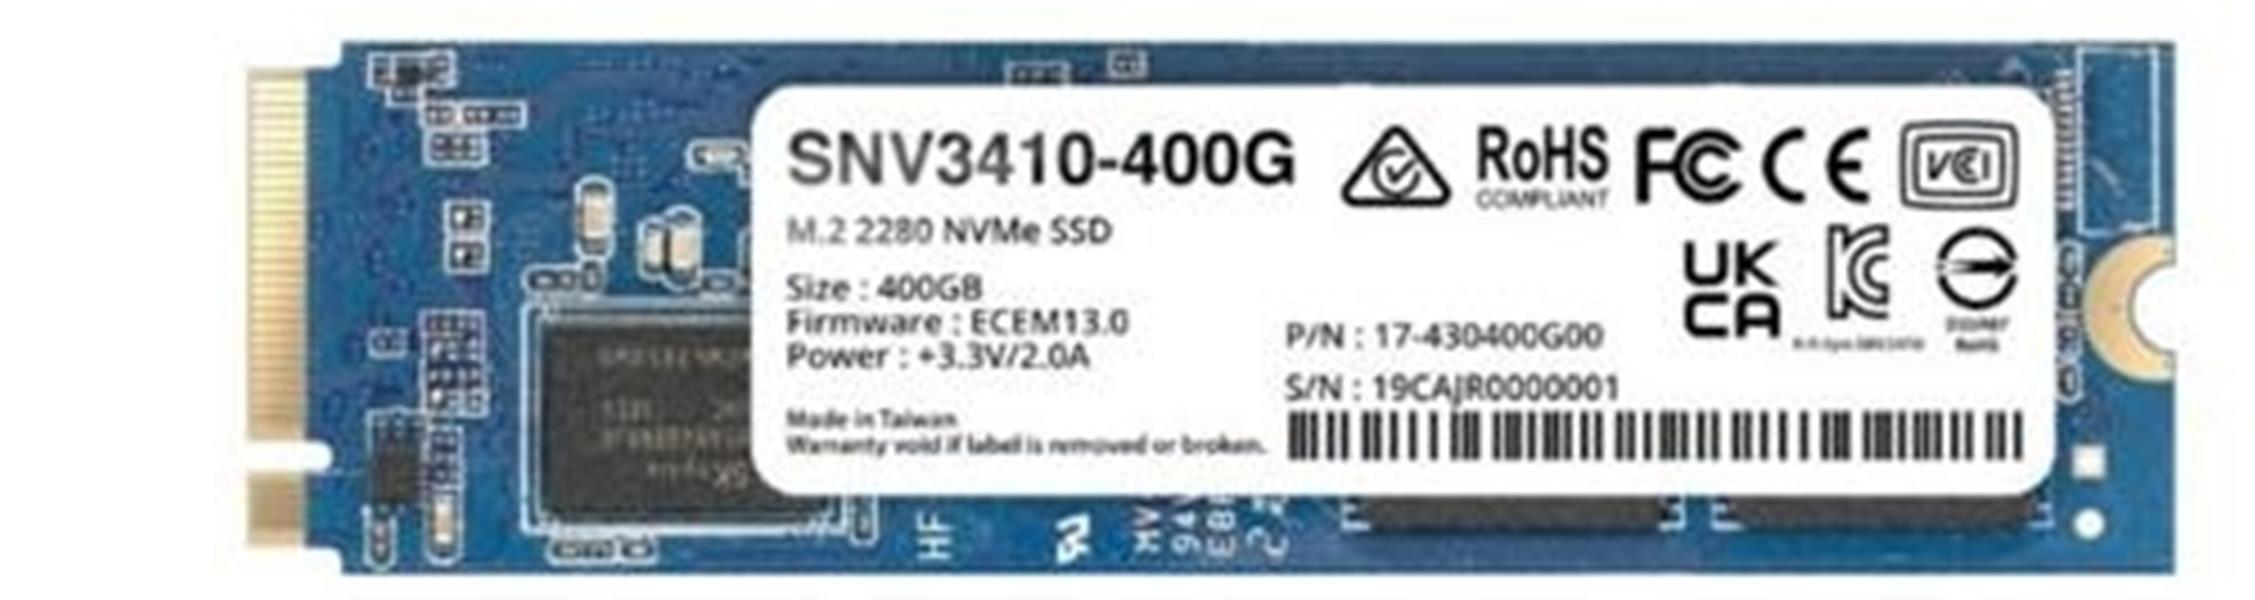 Synology SNV3410 M 2 400 GB PCI Express 3 0 NVMe